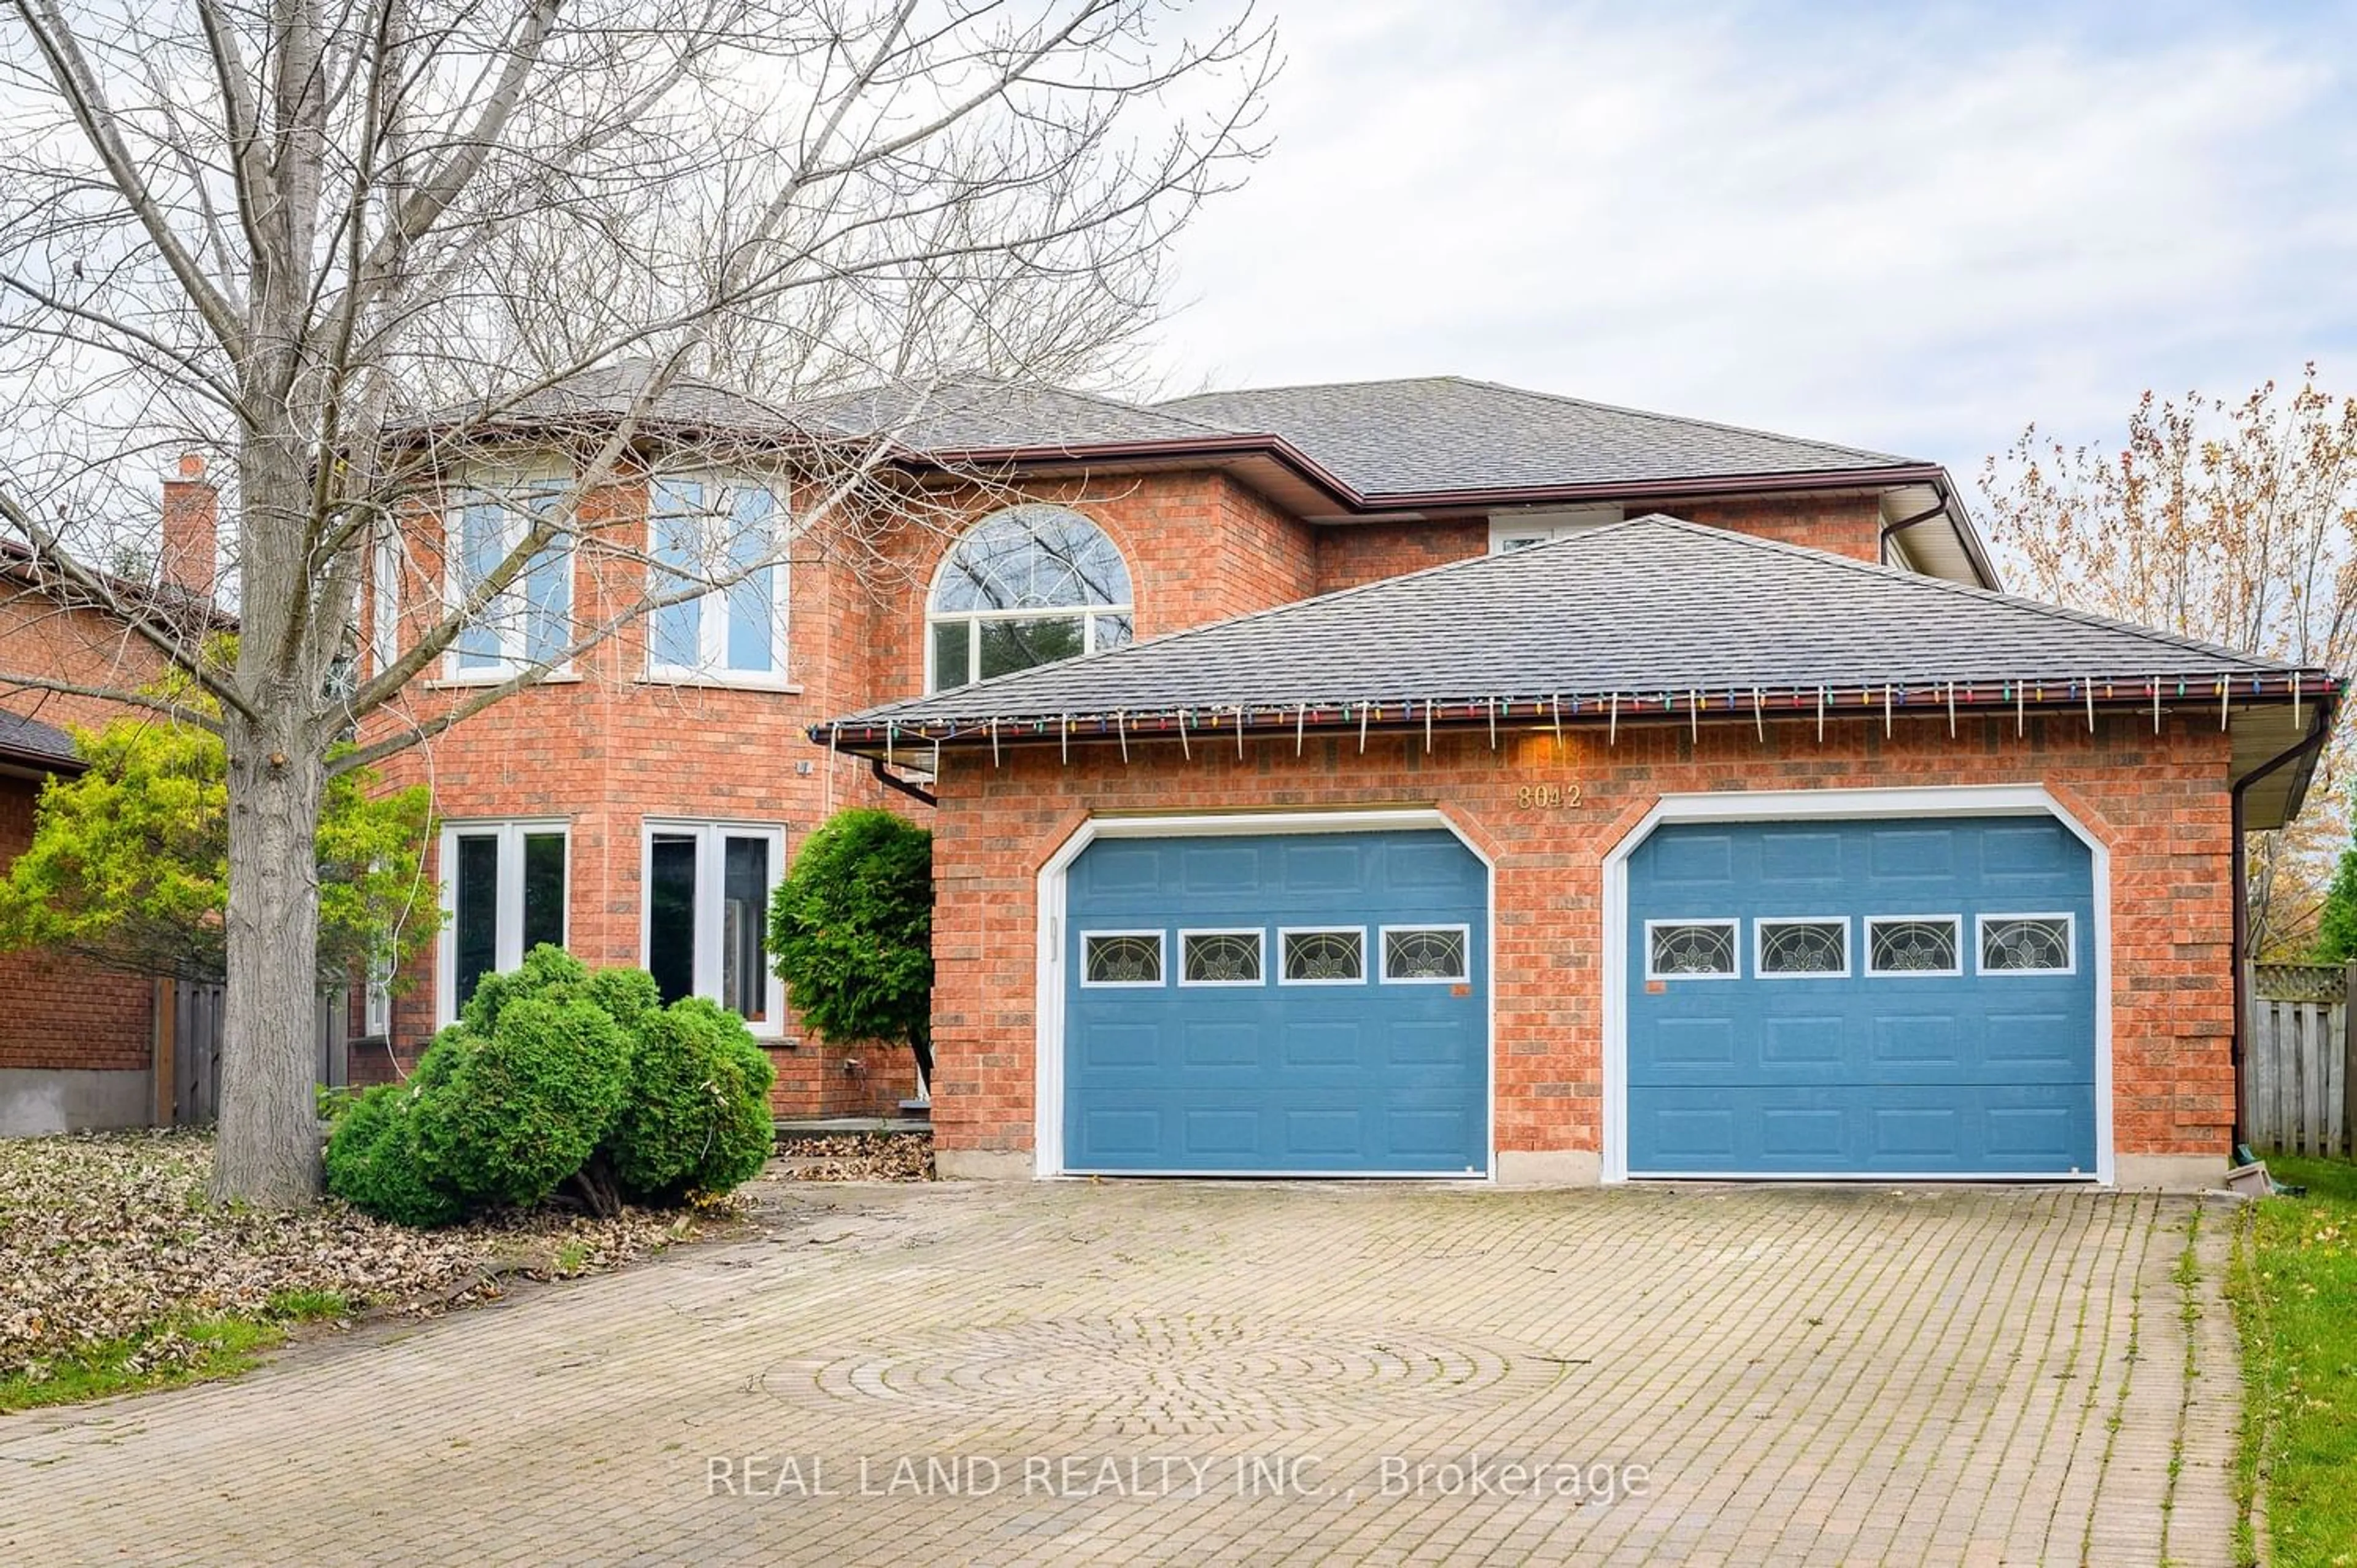 Home with brick exterior material for 8042 Oakridge Dr, Niagara Falls Ontario L2H 2W1